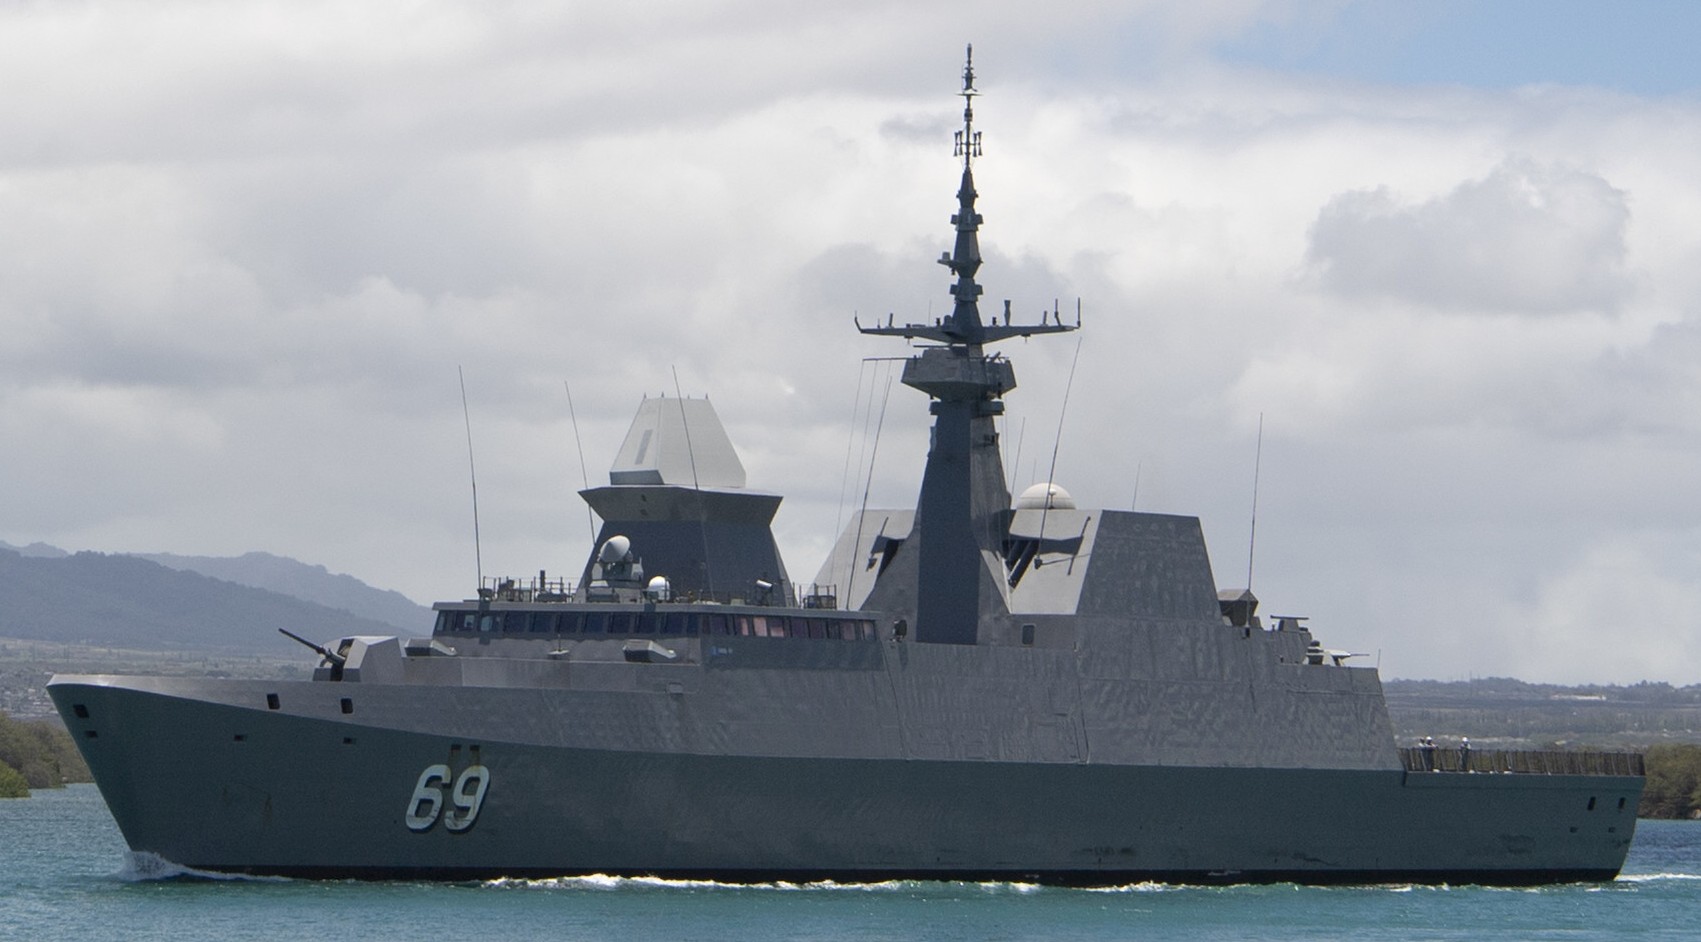 69 rss intrepid formidable class frigate republic singapore navy 03x